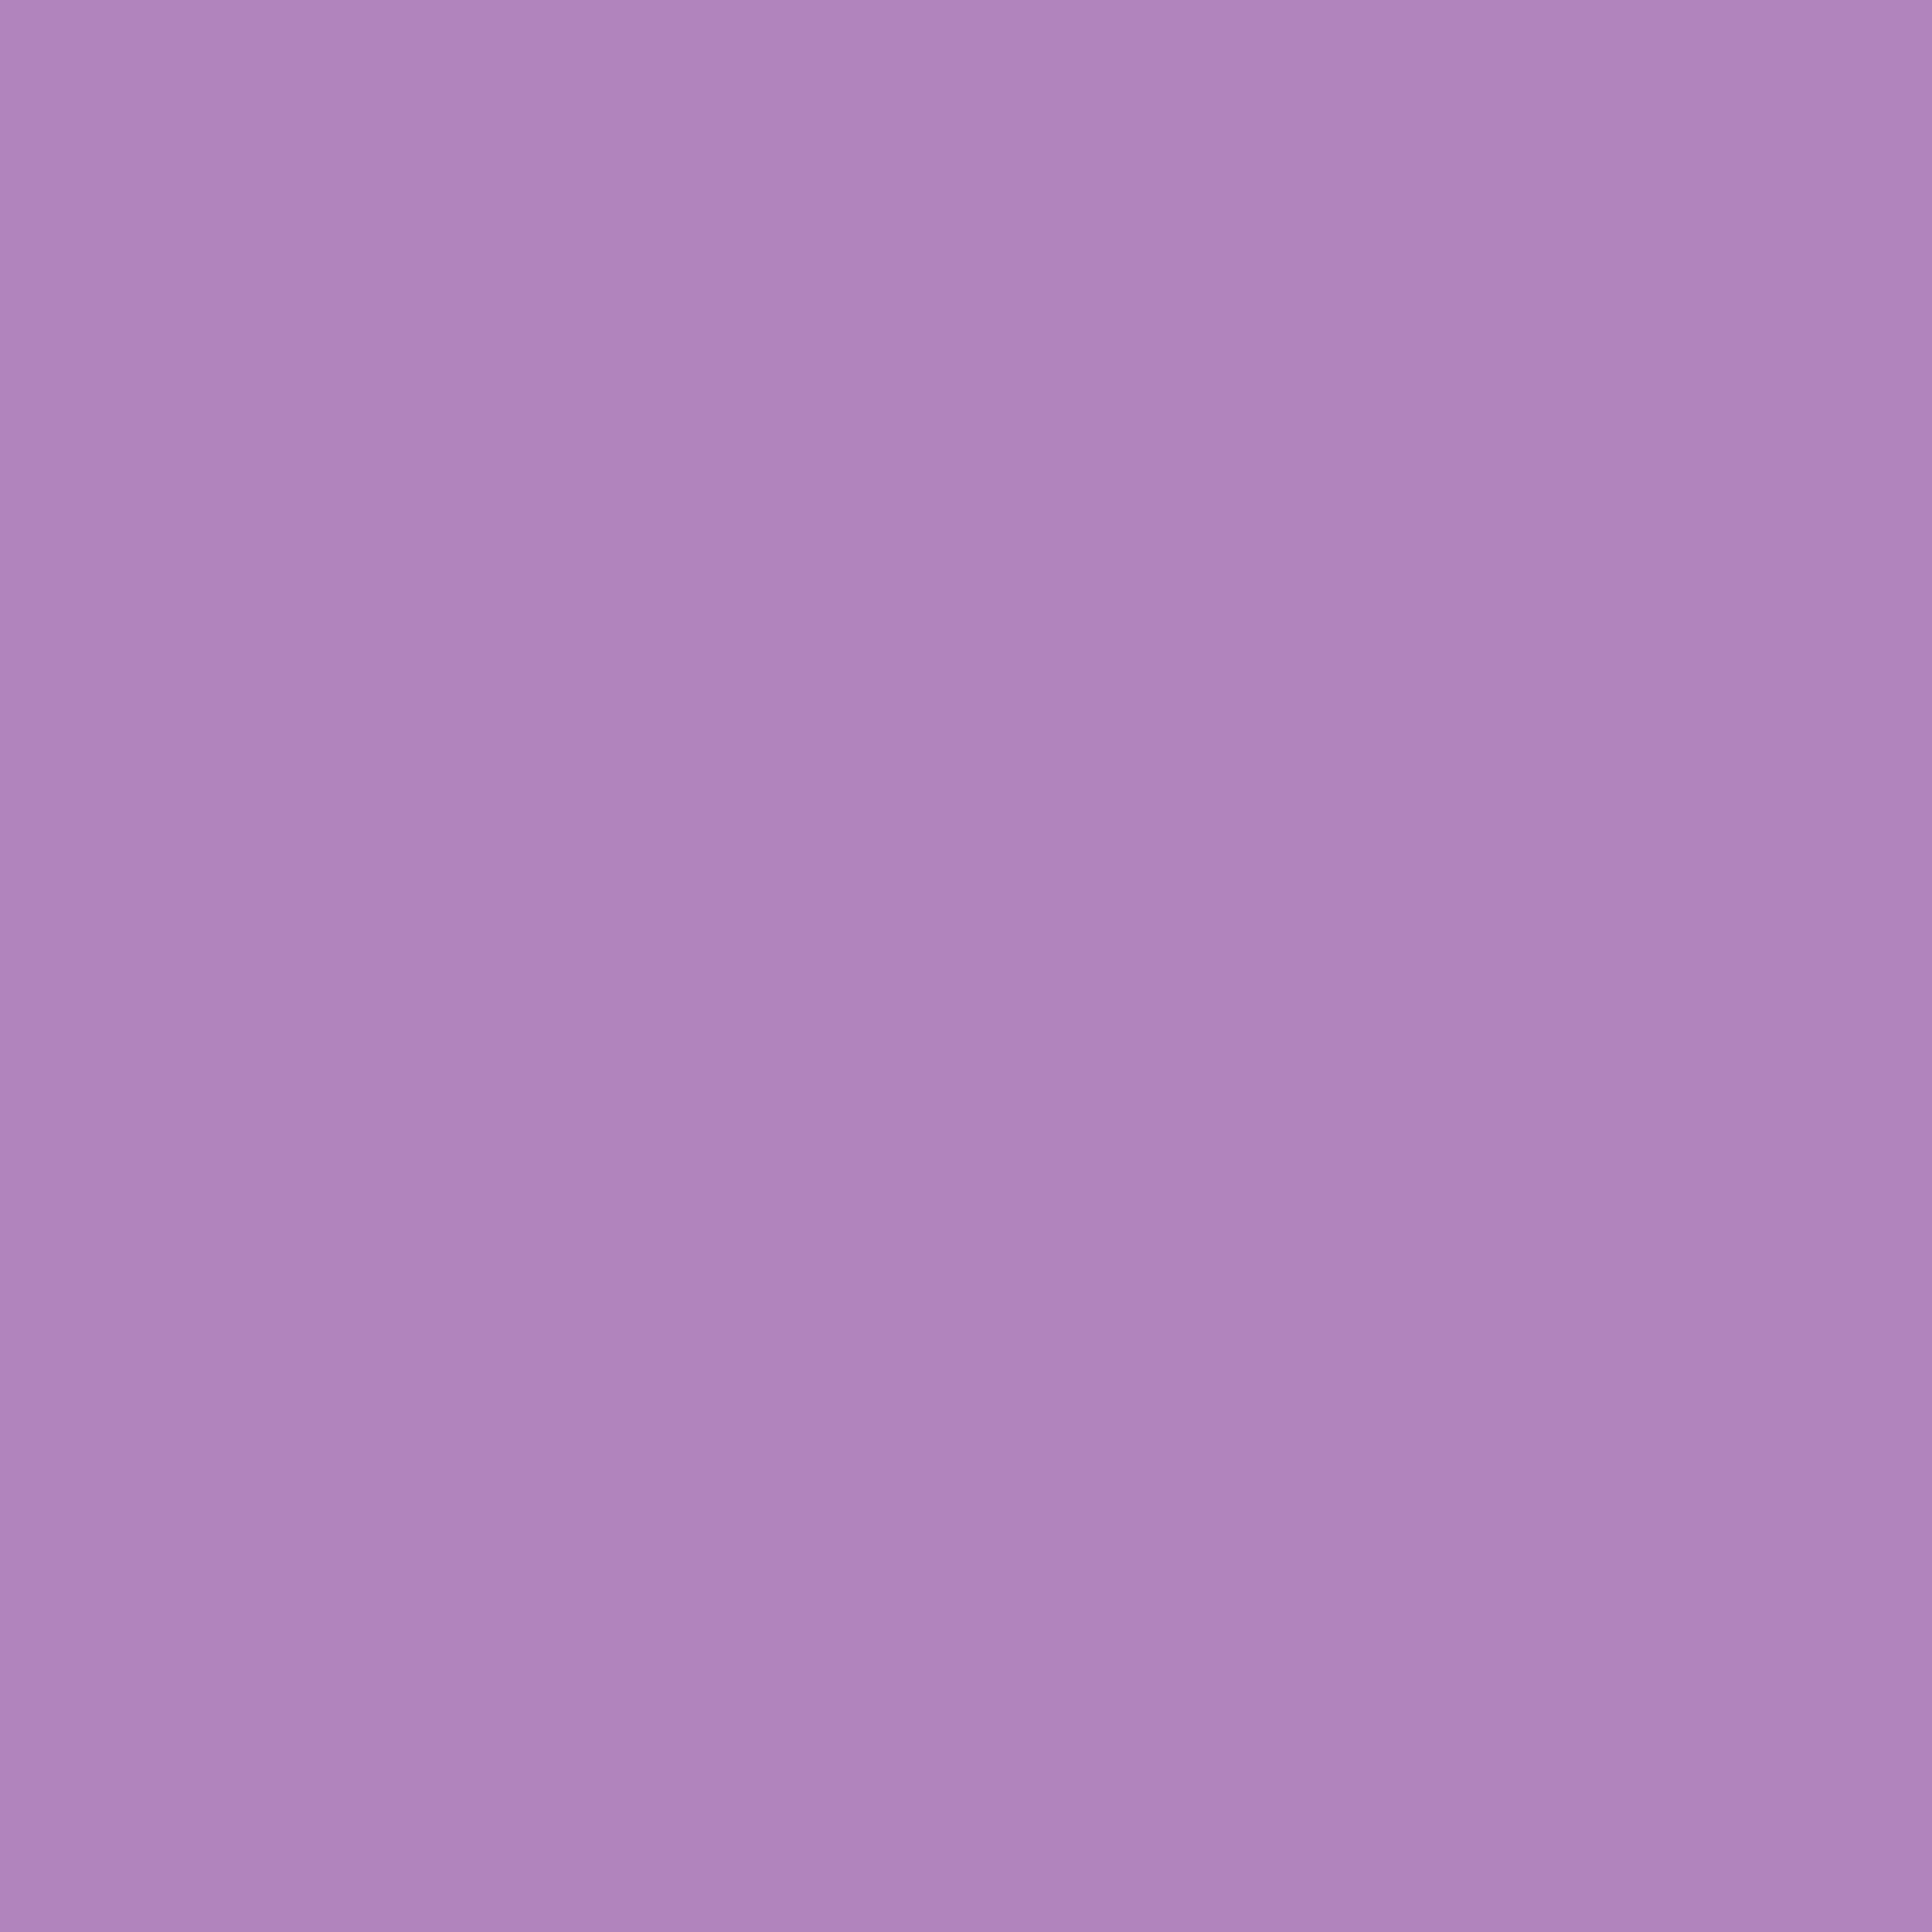 2732x2732 African Violet Solid Color Background